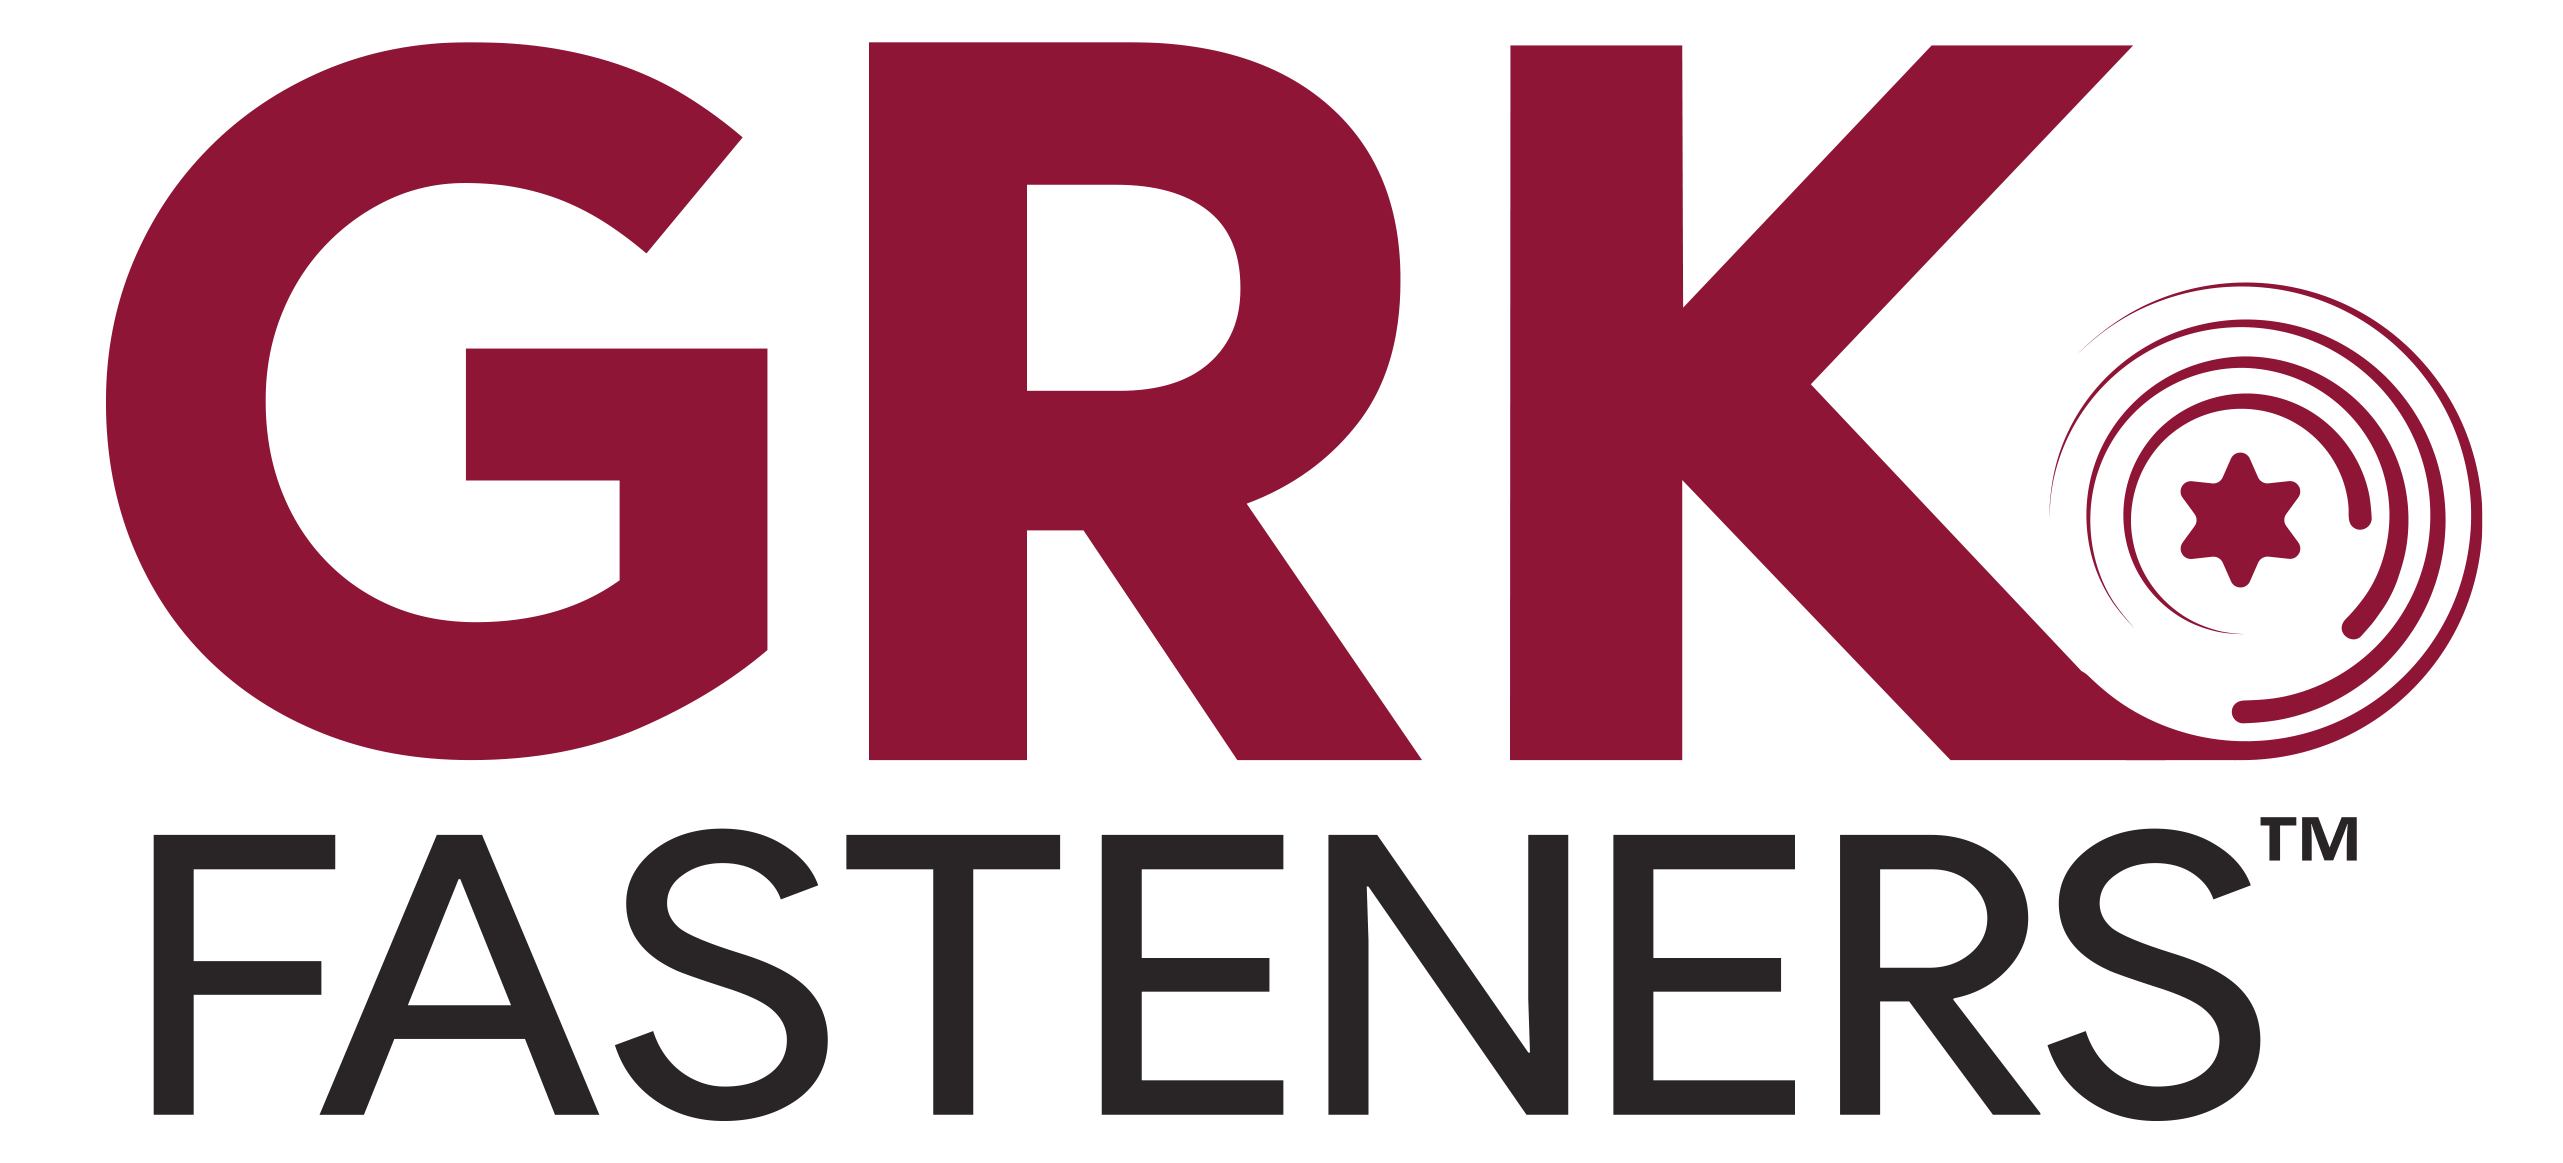 official grk logo small